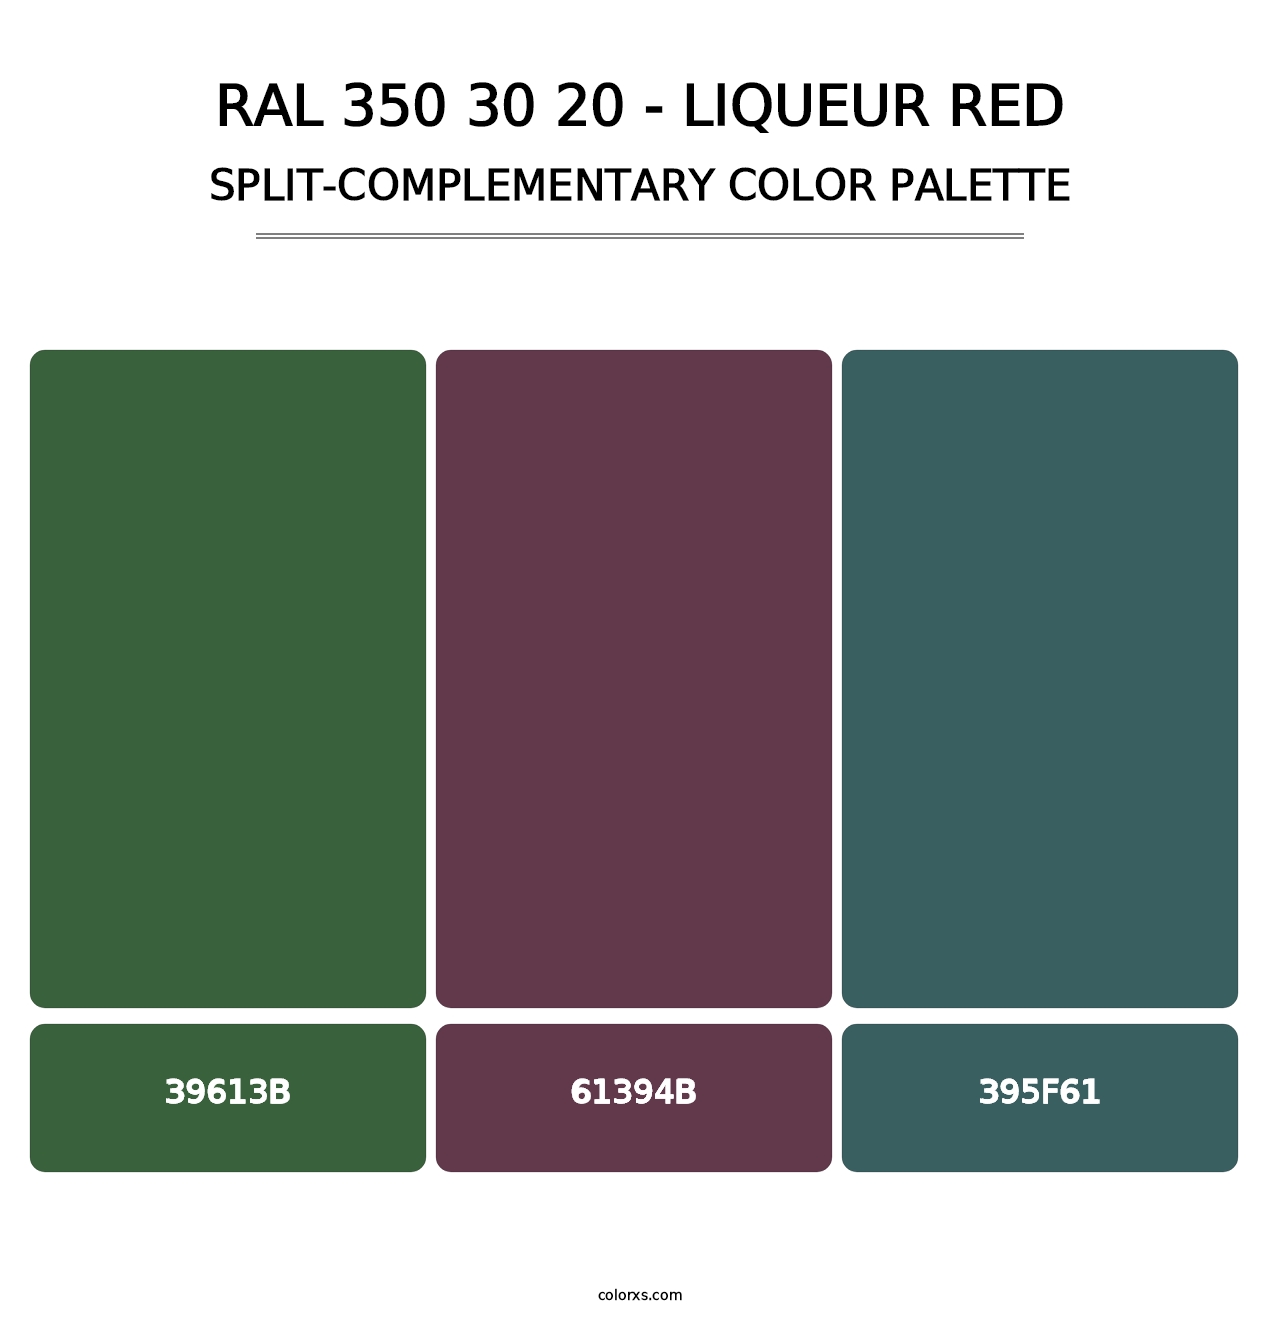 RAL 350 30 20 - Liqueur Red - Split-Complementary Color Palette